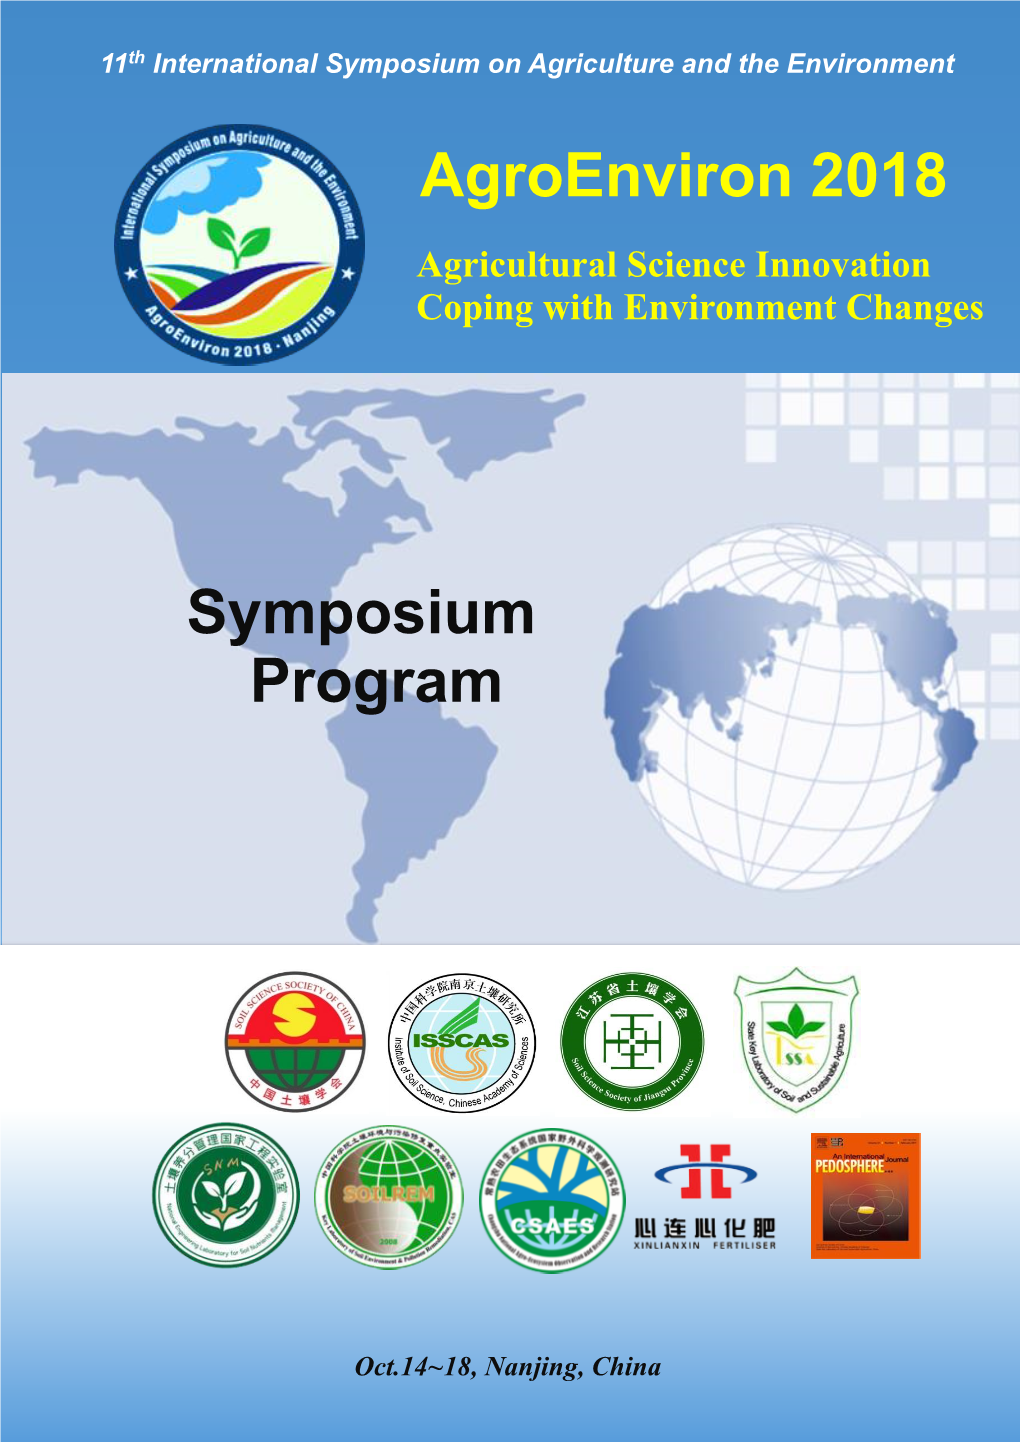 Agroenviron 2018 Symposium Program